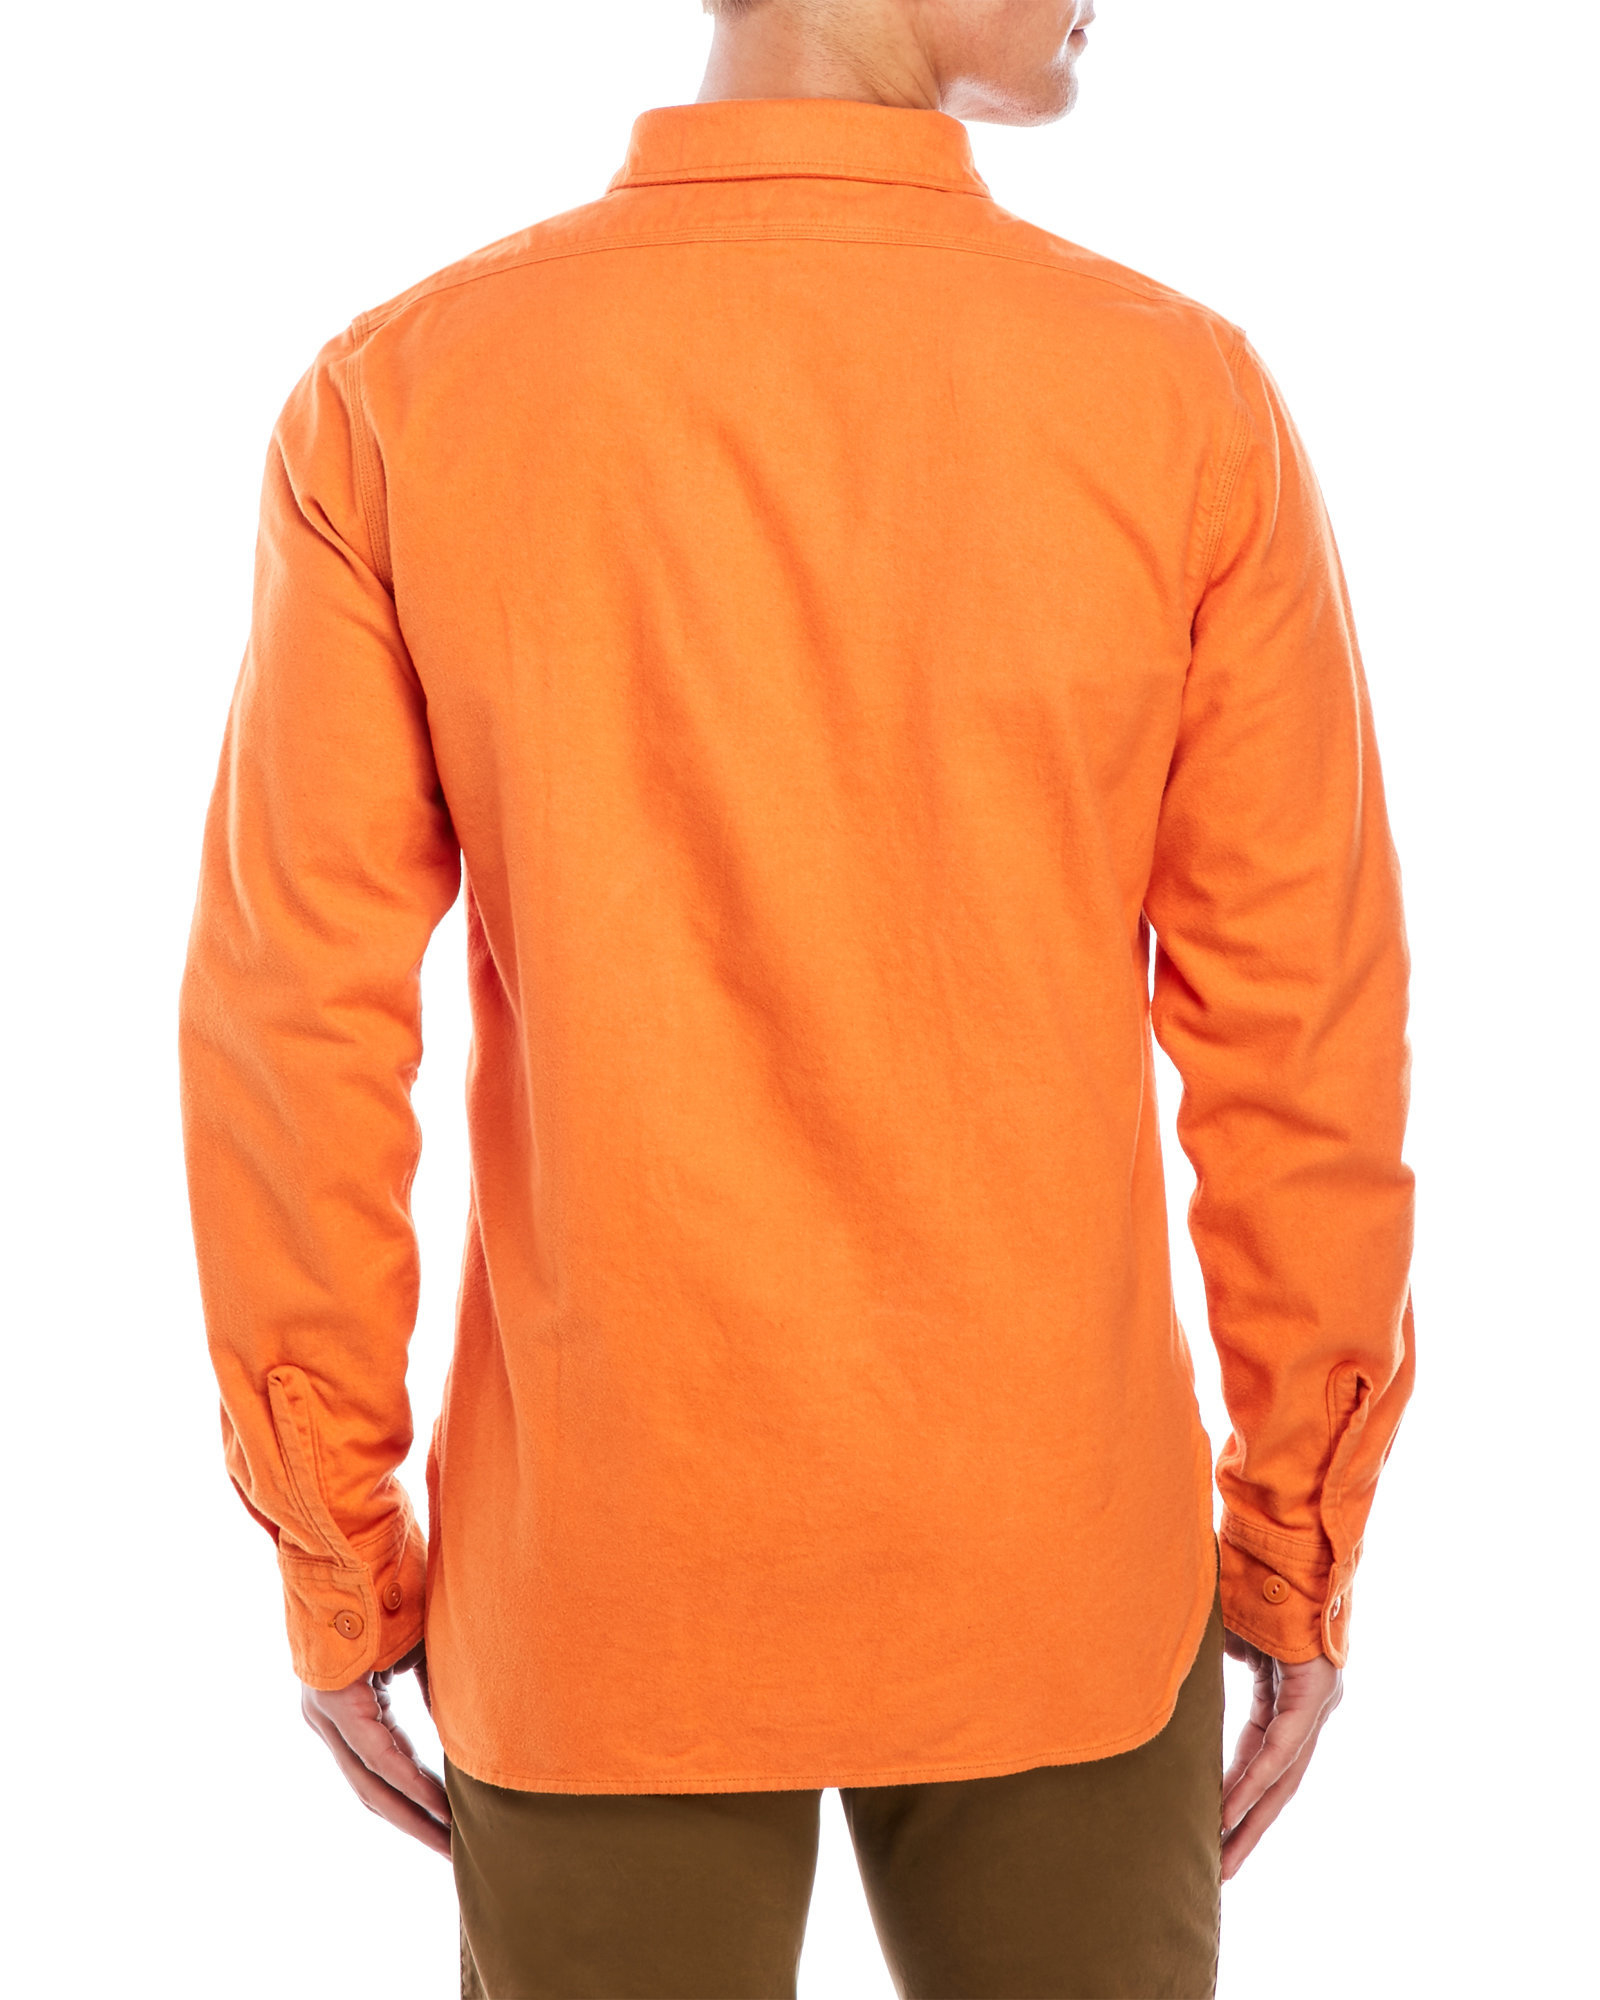 Lyst - Woolrich Chamois Shirt in Orange for Men